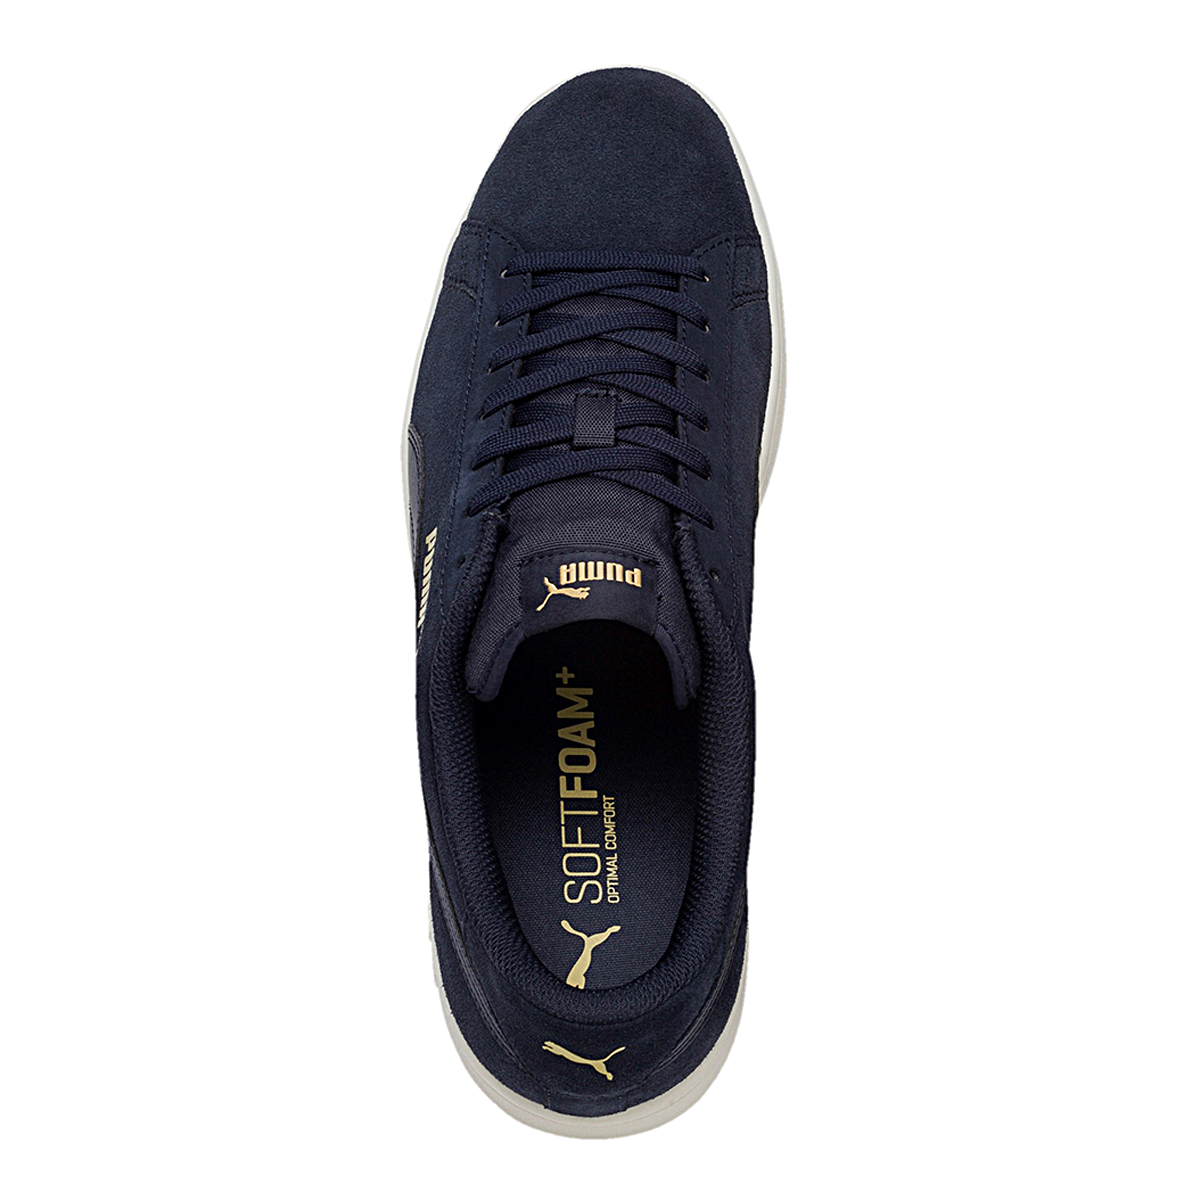 Puma Smash v2 Unisex Sneaker Schuh blau 364989 24